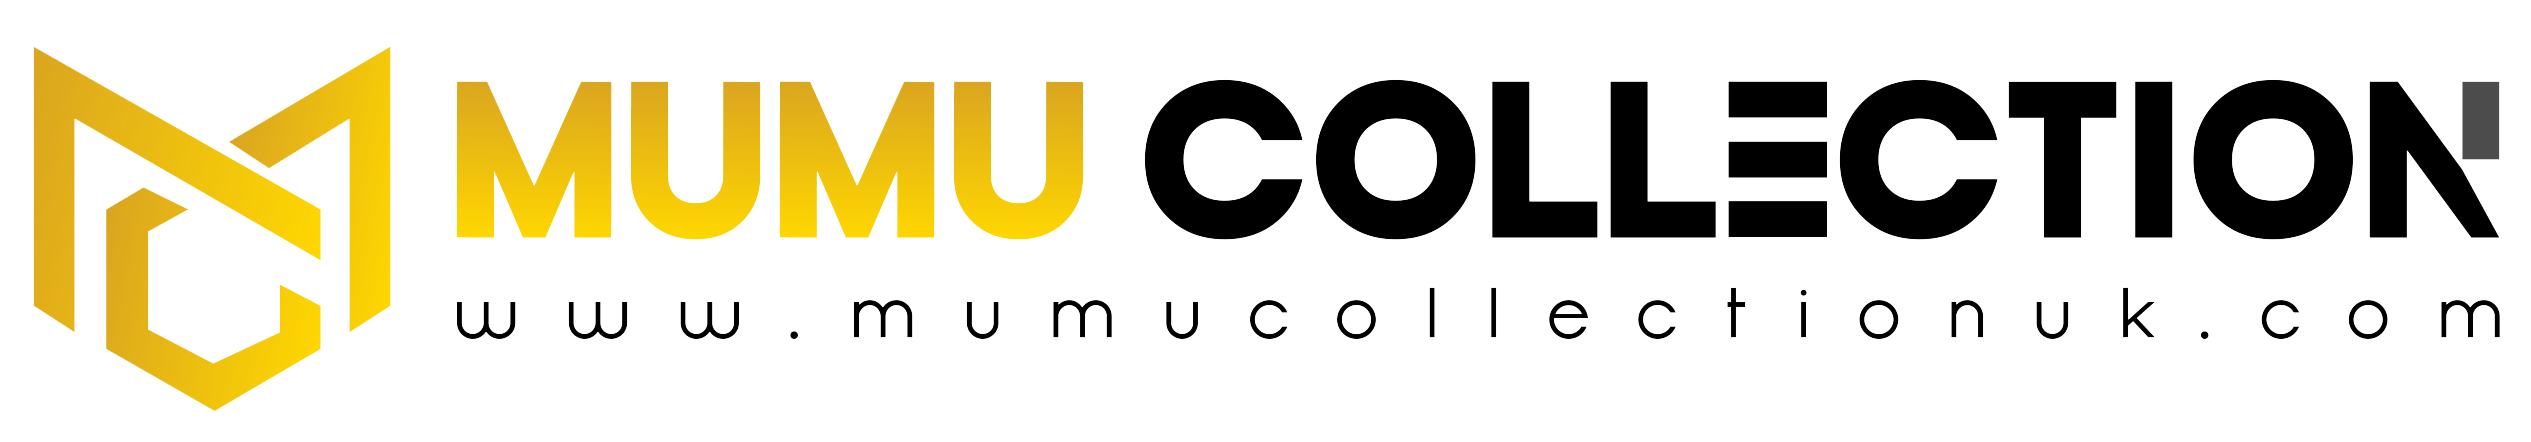 Mumu-Collection-logo